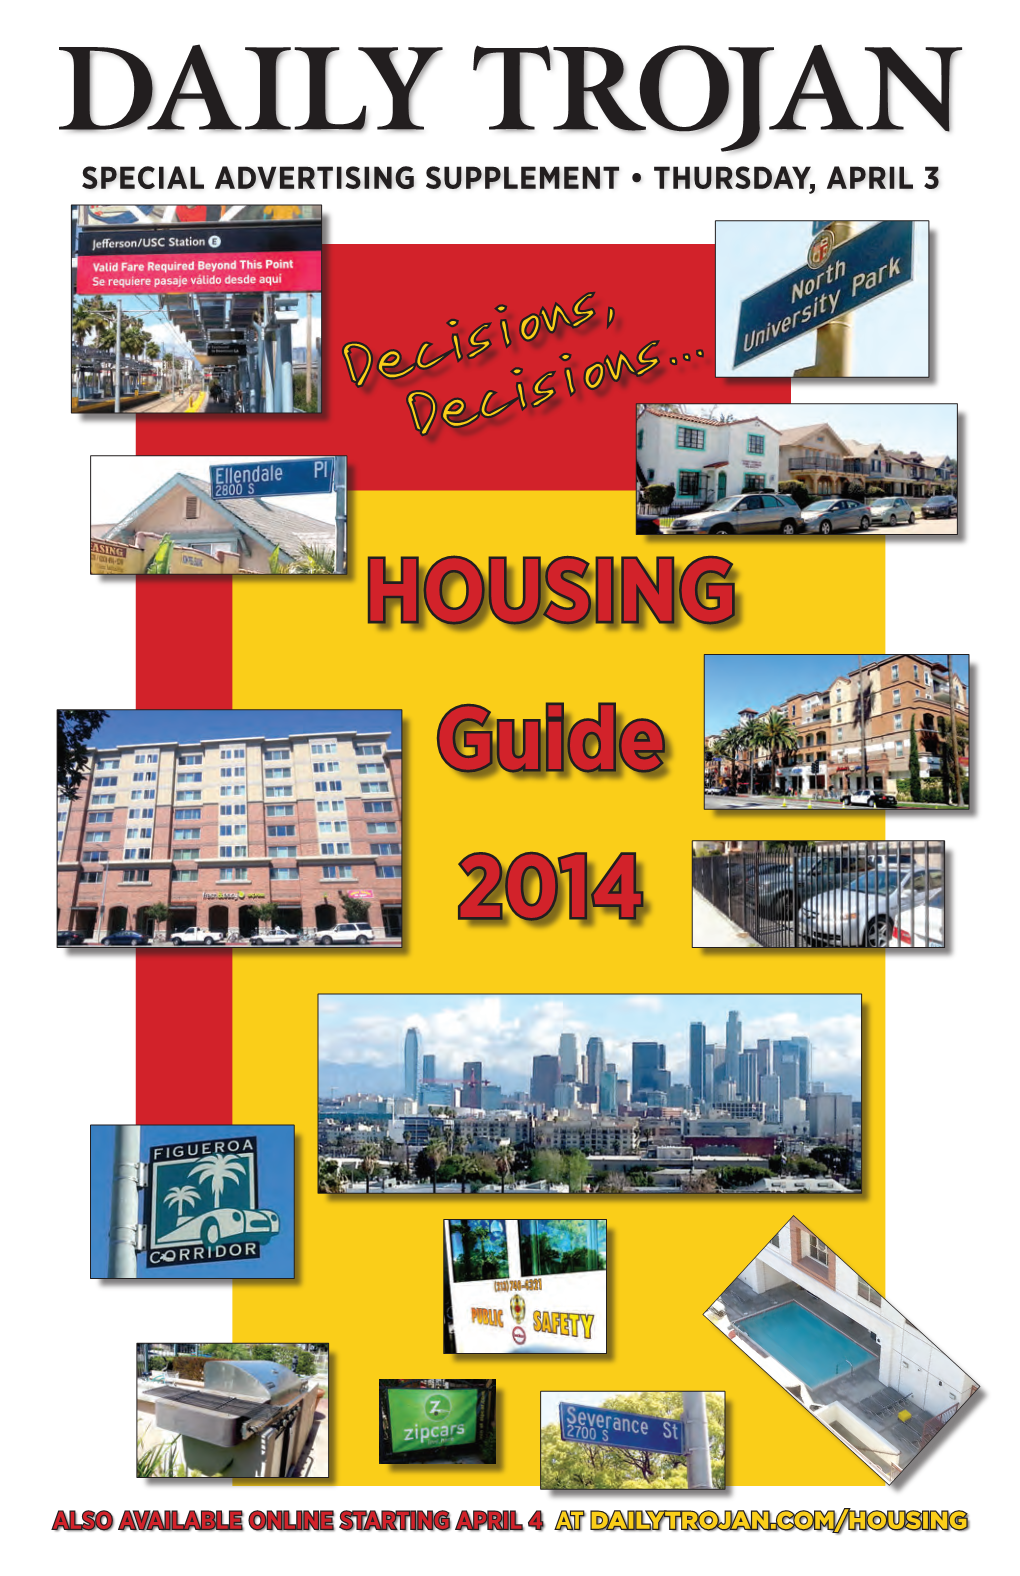 HOUSING Guide 2014